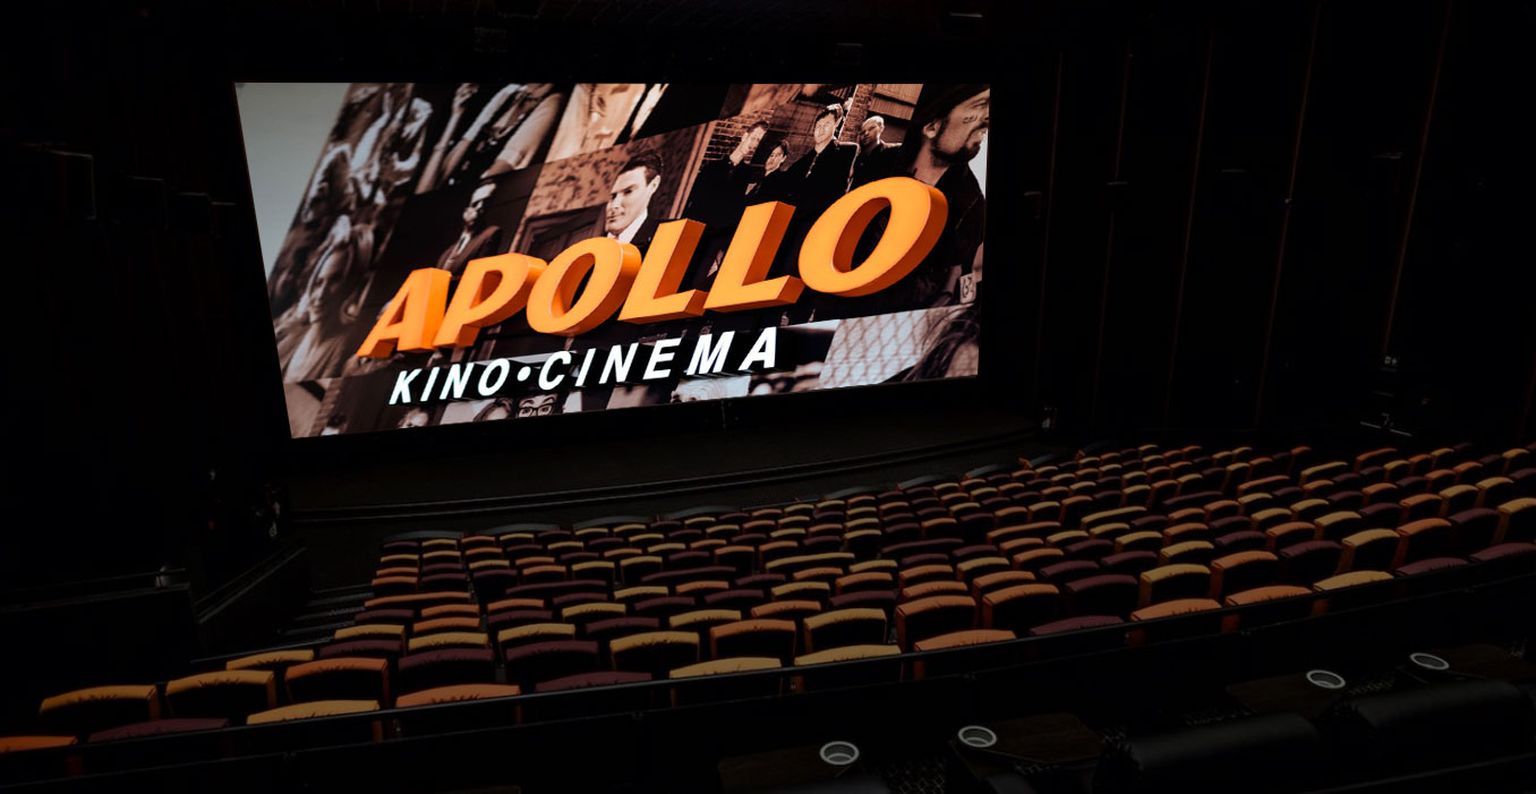 Apollo kino